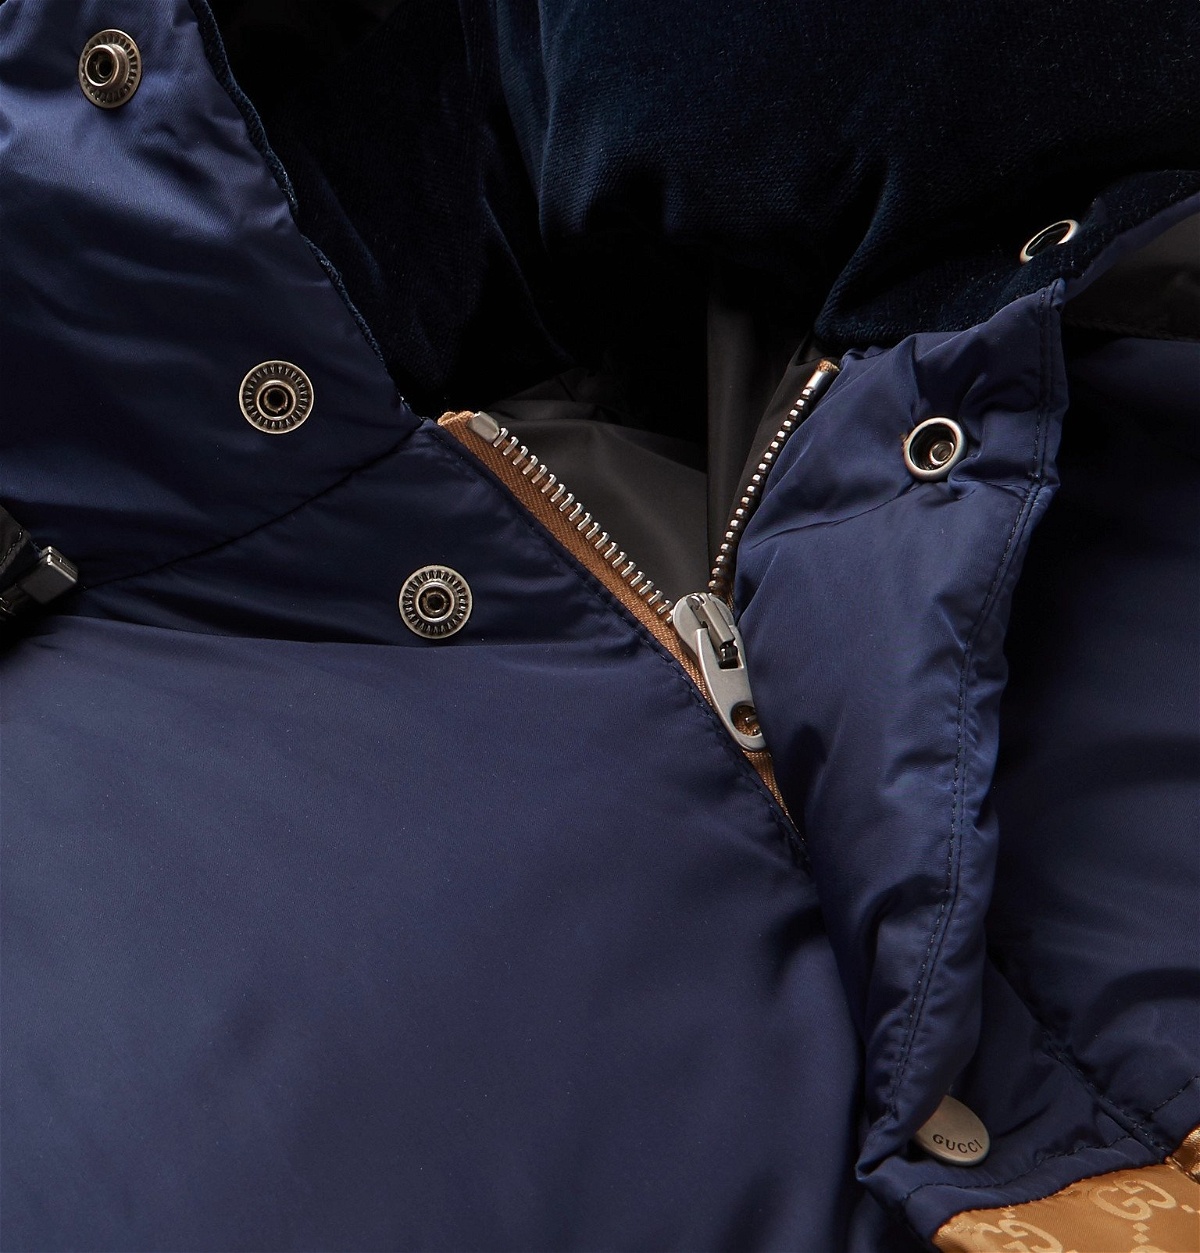 GUCCI: nylon jacket - Blue  Gucci jacket 737799XWAXT online at